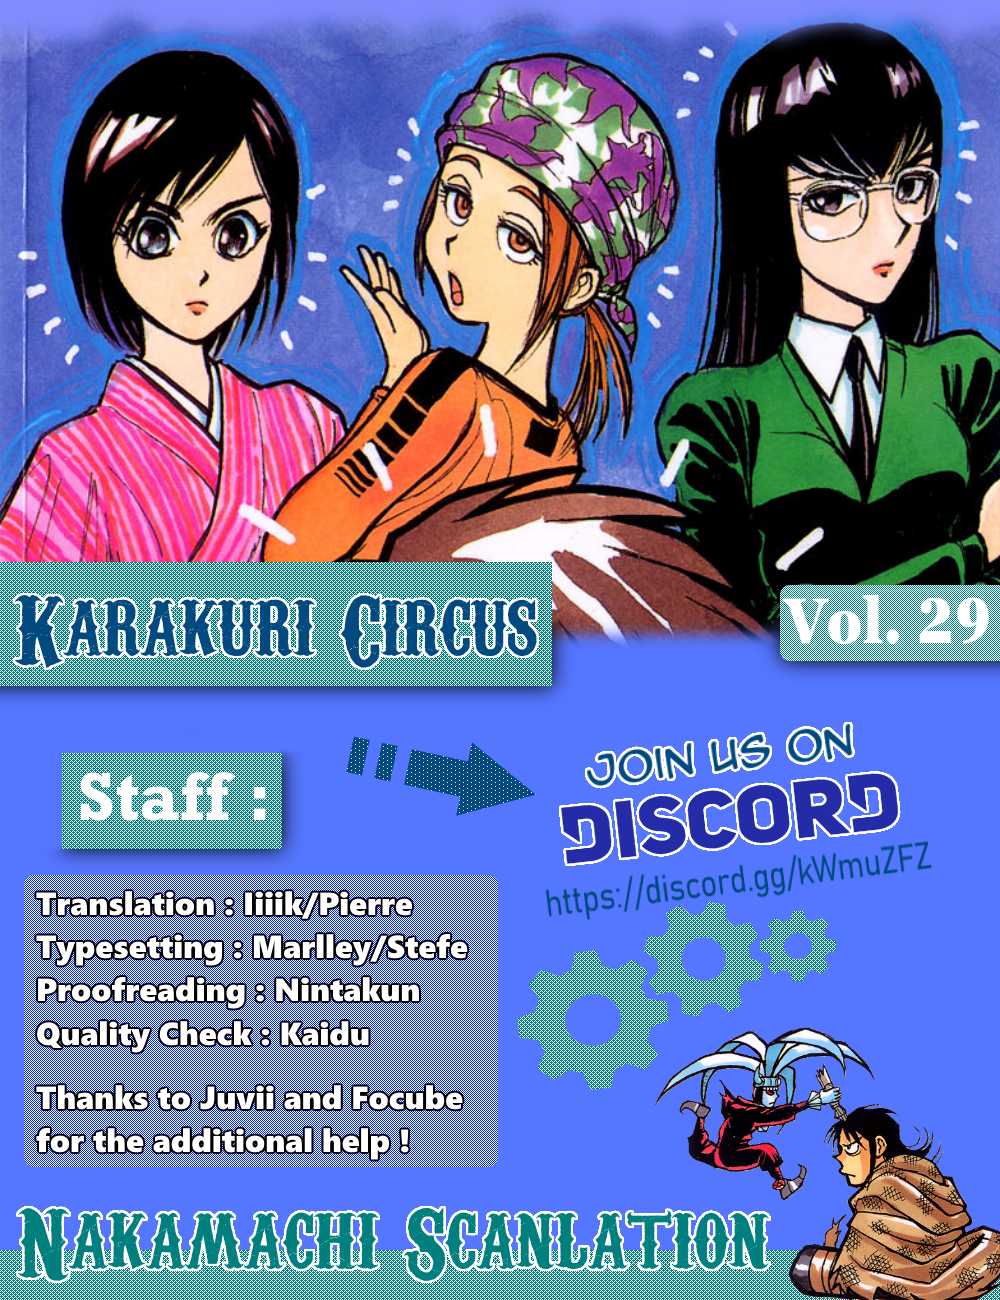 Karakuri Circus Chapter 283: Main Part - Welcome To The Kuroga Village - Act 1: Opening Bell - Picture 1